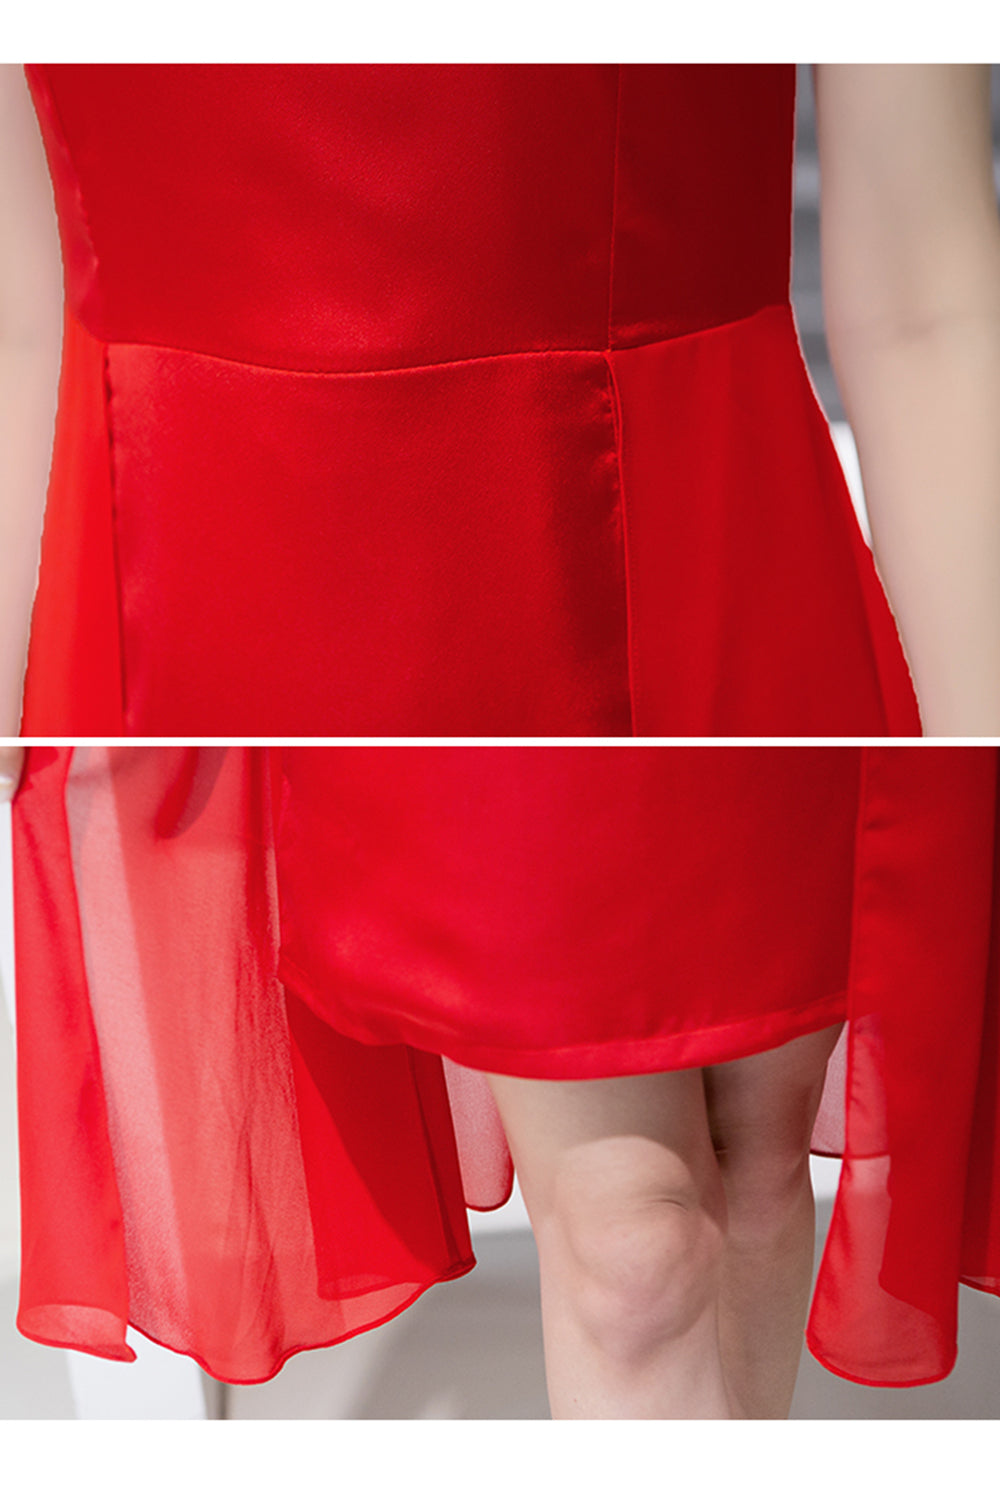 Ketty More Women Fashion Solid Color Irregular Skirt Dress-KMWD463